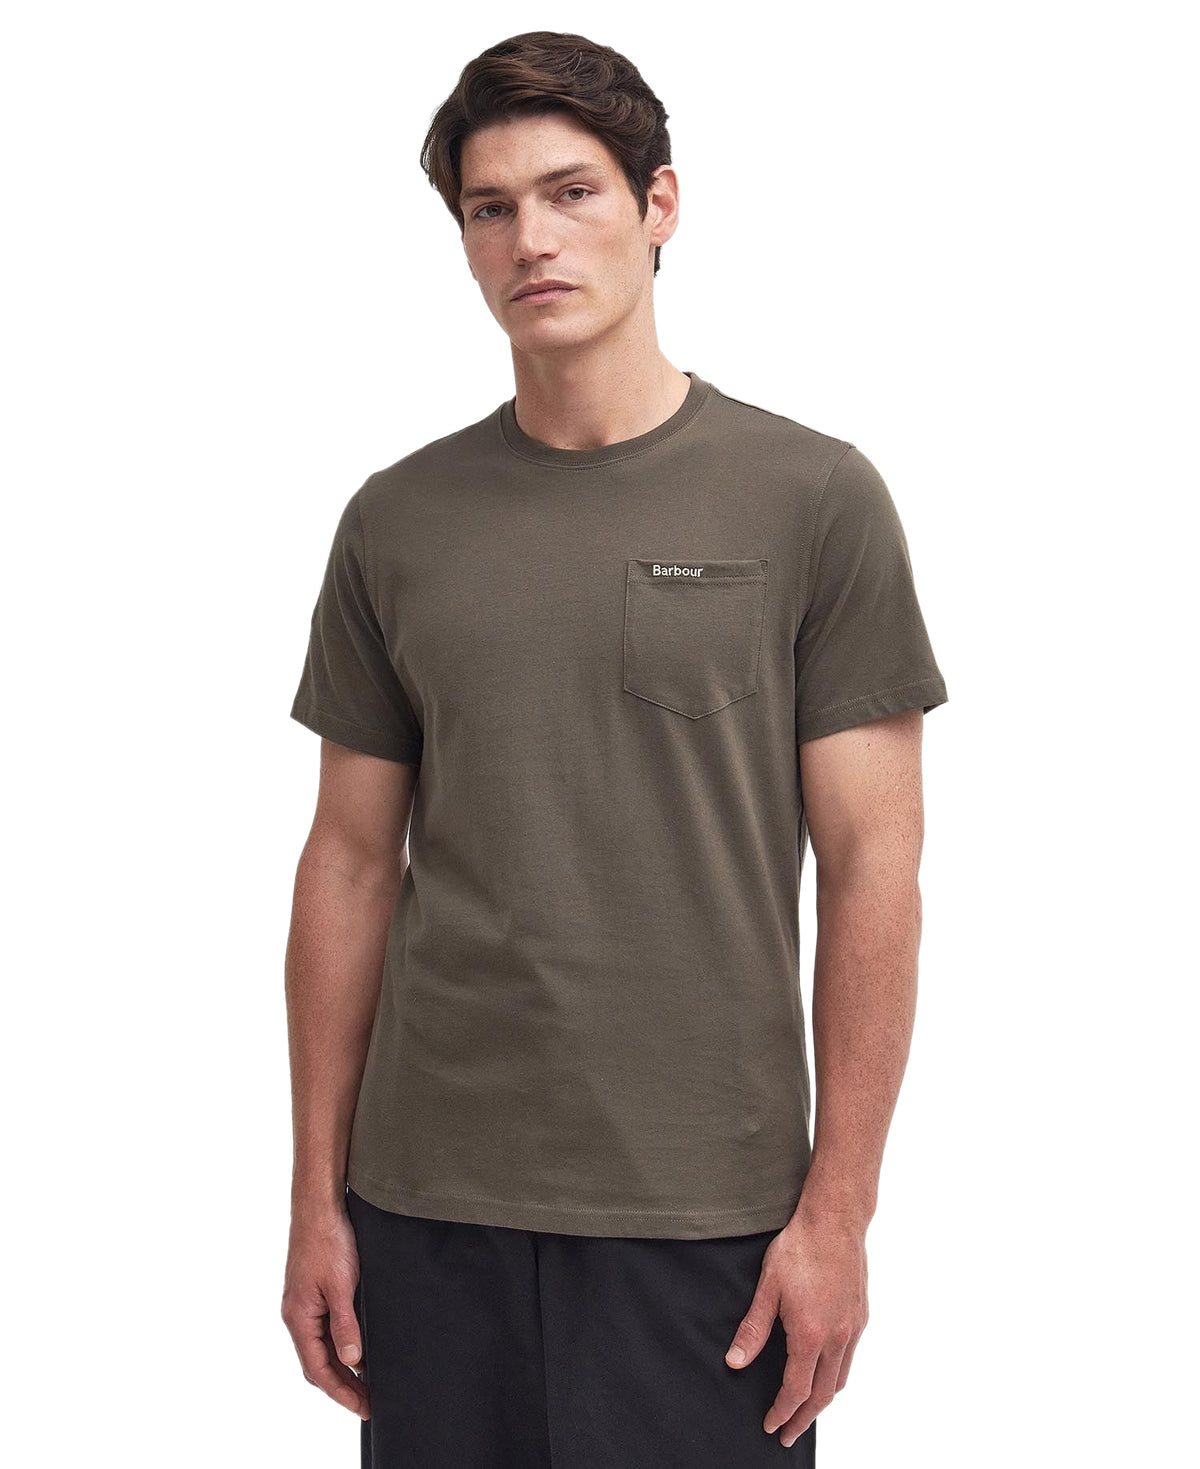 Barbour Mens 'Langdon' Pocket T-Shirt, 01, Mts1114, Tarmac